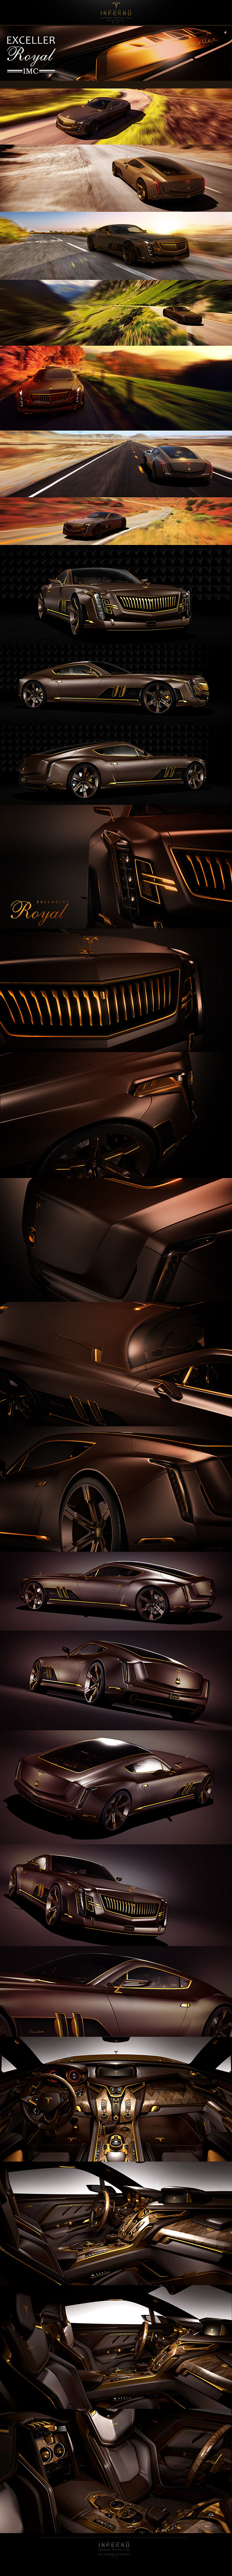 automotive    Concept Car  Car  3D Modeling  Rendering  Photography design  Industrial Design  piotr czyzewski  exclusiwe  luxury